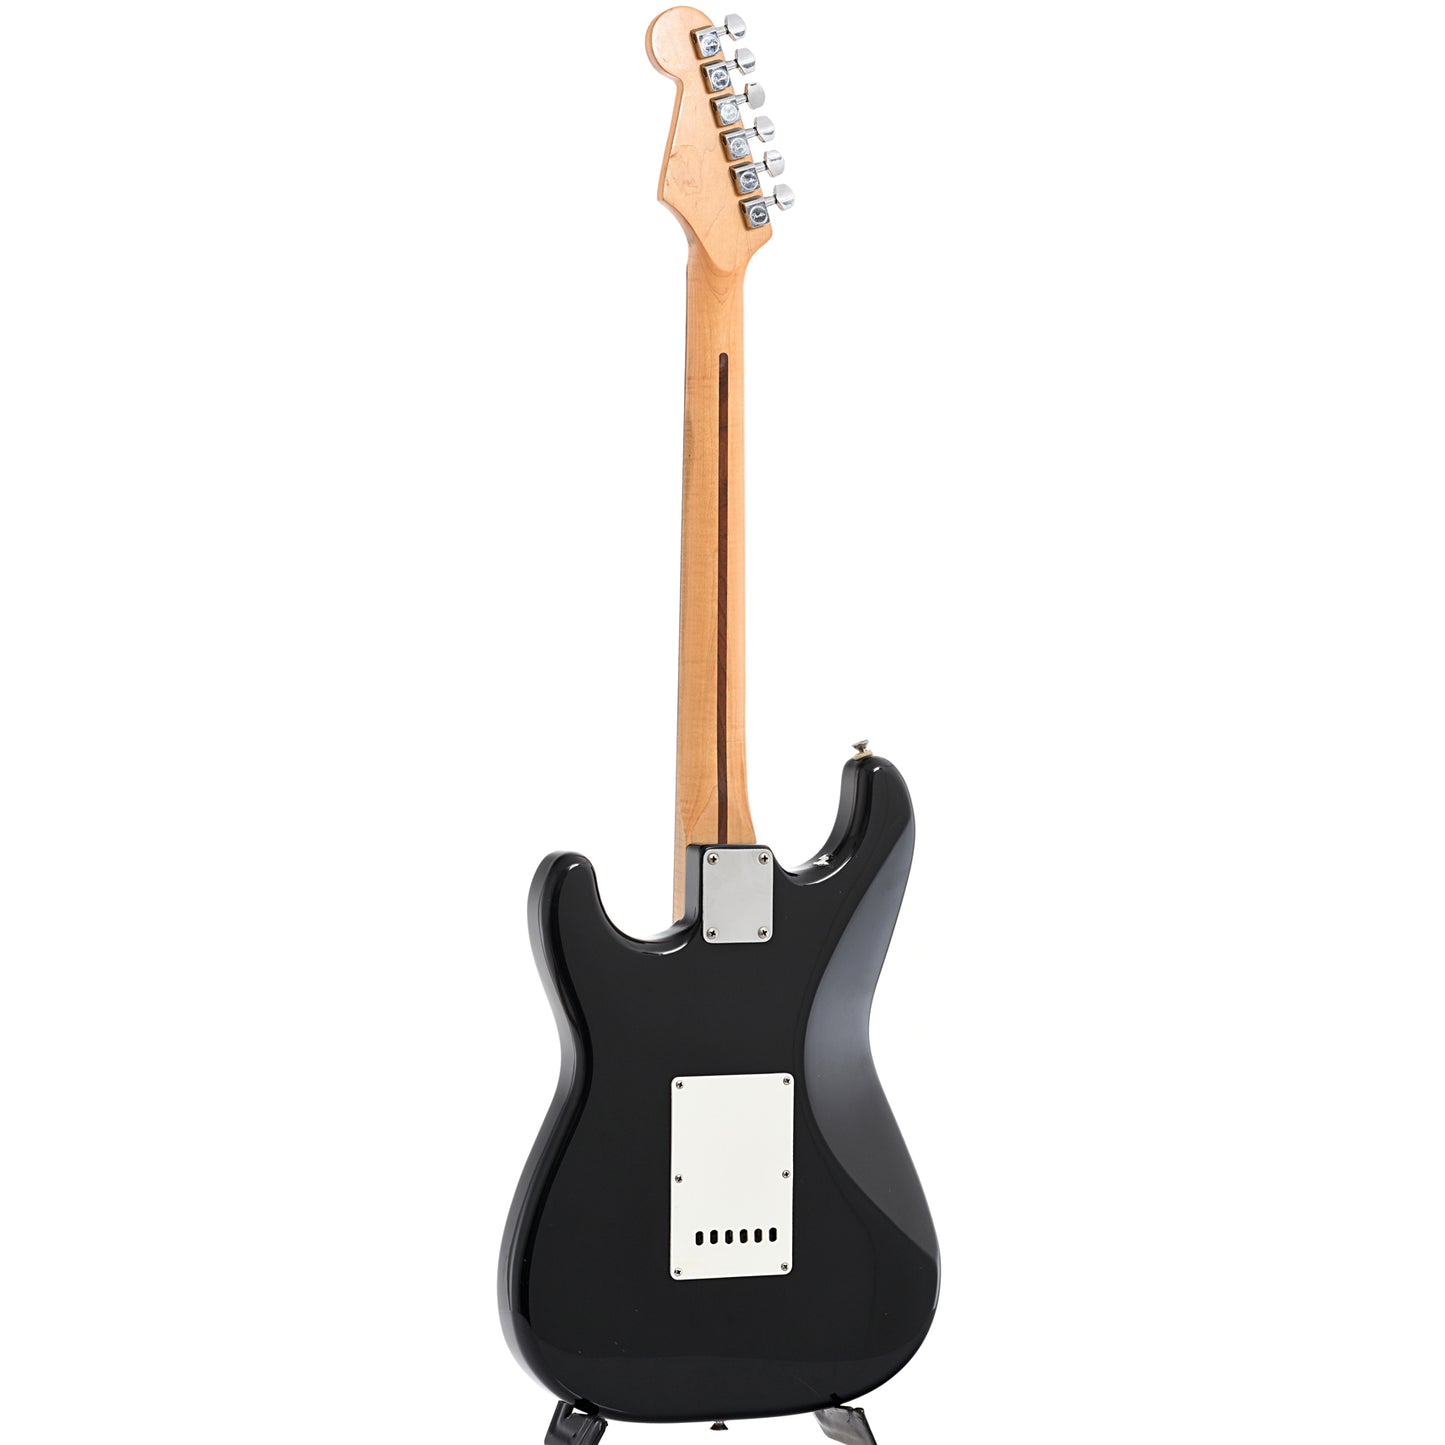 Full back and side of Fender Stratocaster Standard Electric Guitar (c.1992-93)